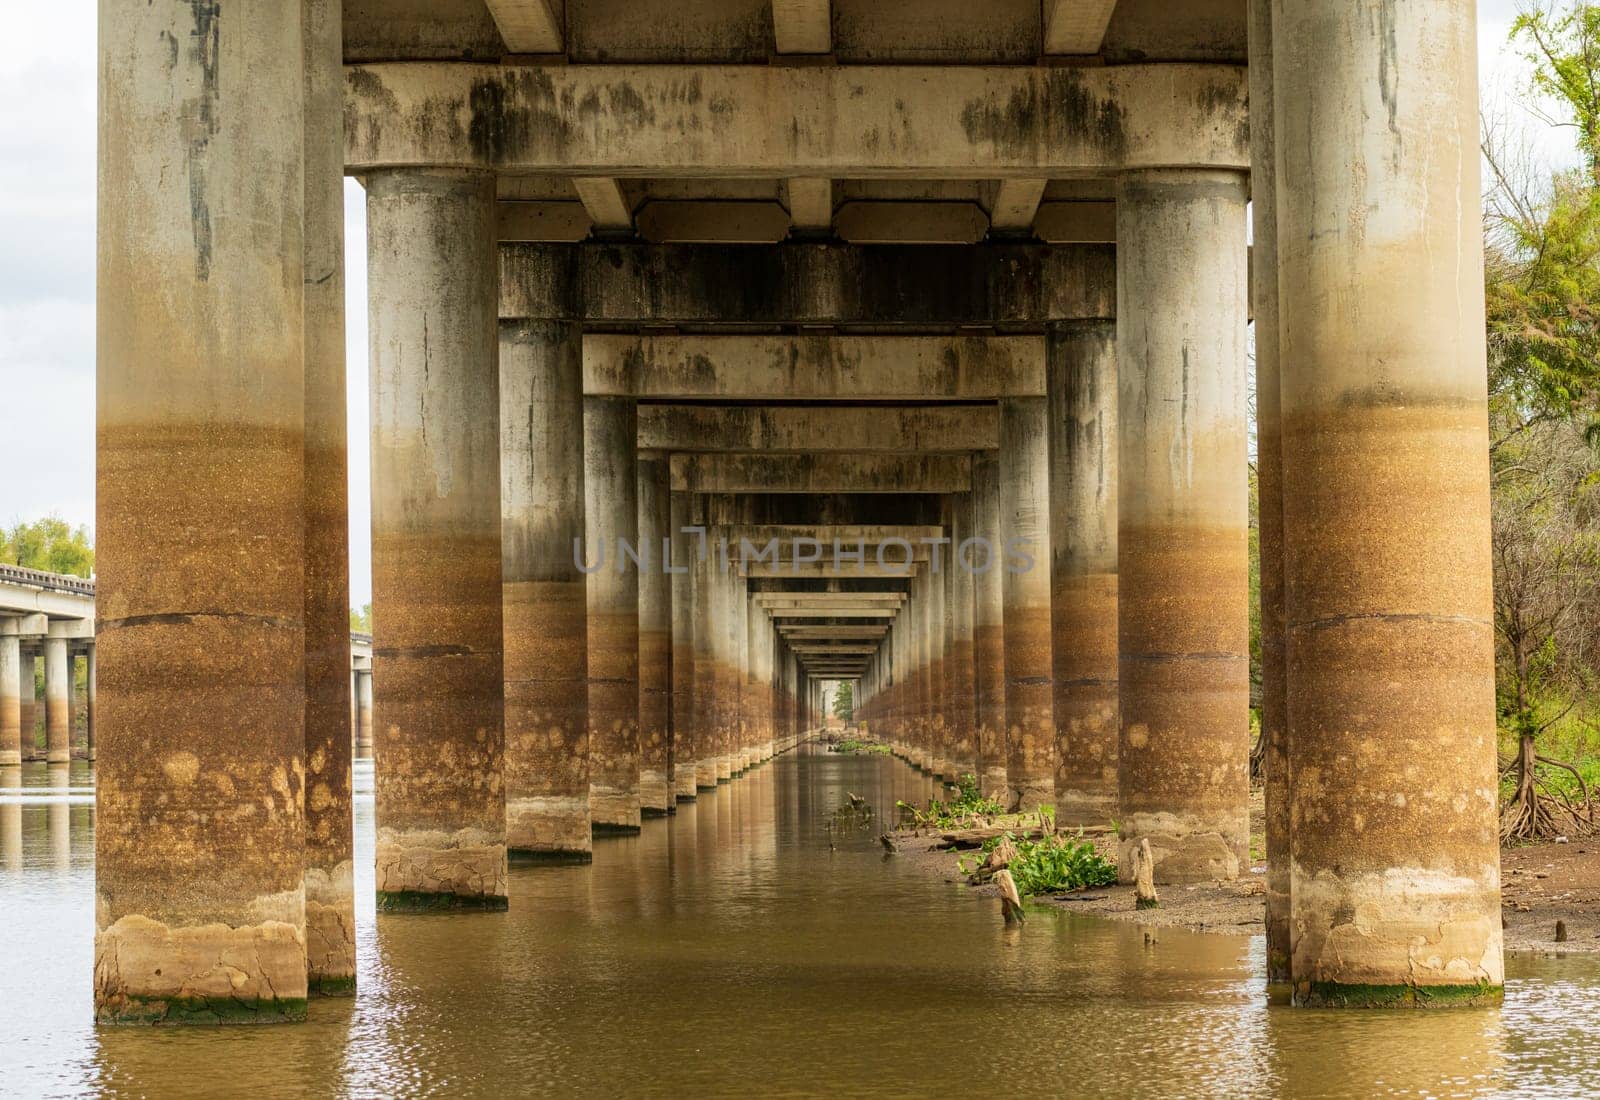 Supporting pillars of I-10 bridge above Atchafalaya basin in Louisiana by steheap